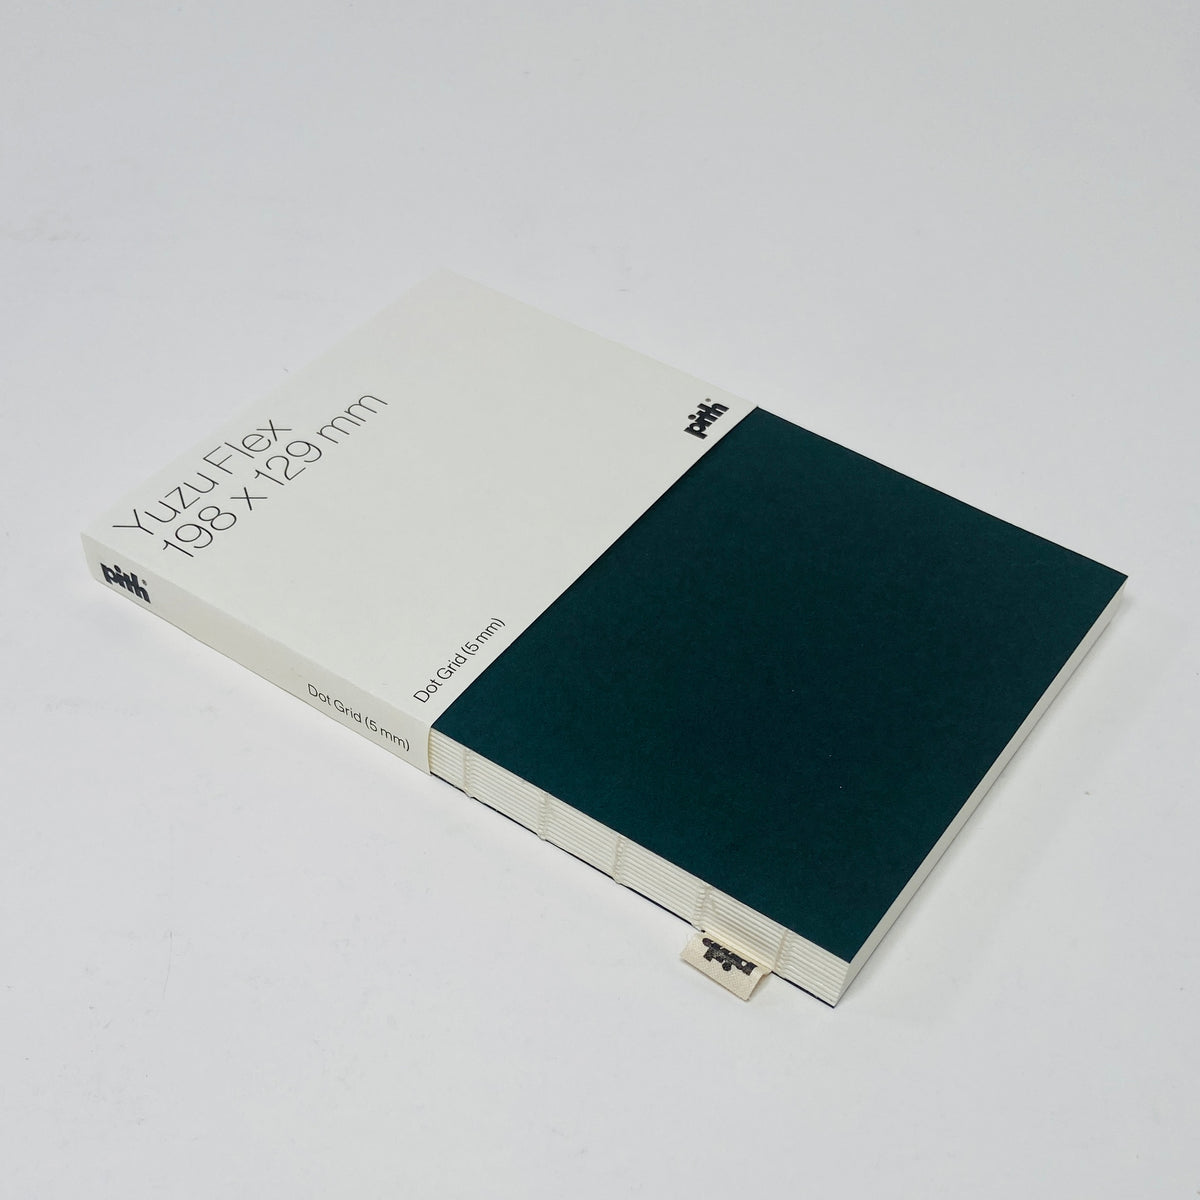 Pith Yuzu Flex Notebook Hunter Green - Dot Grid